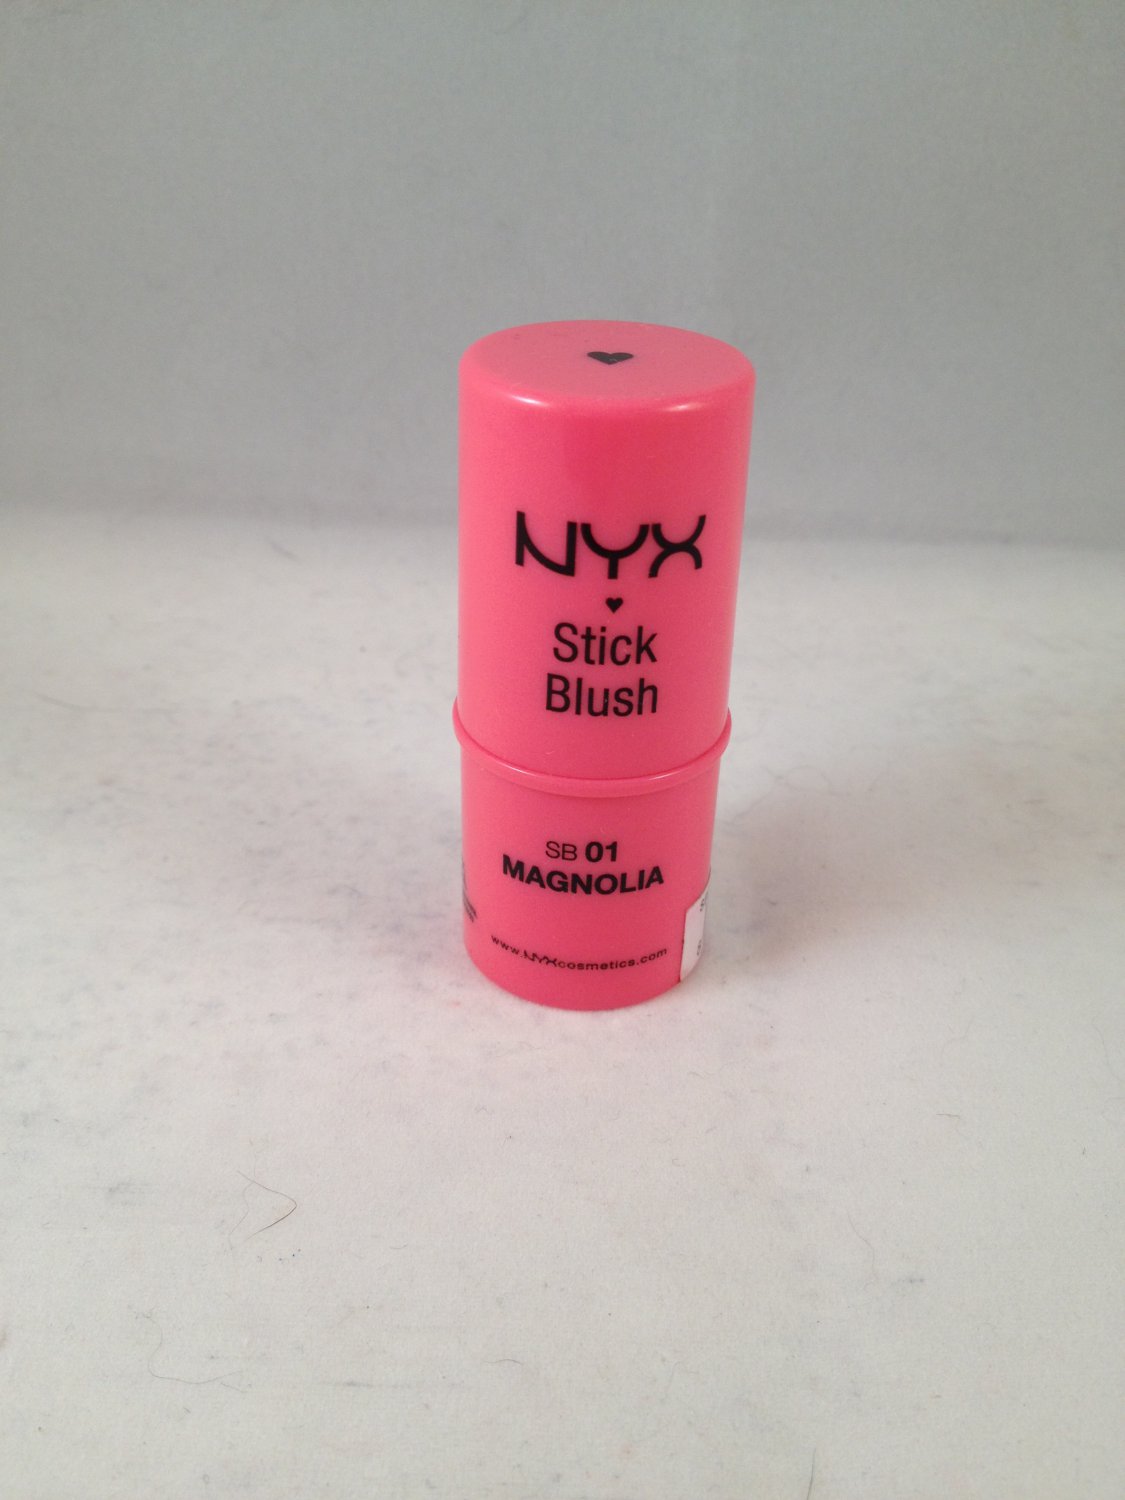 NYX Stick Blush SB01 Magnolia cream